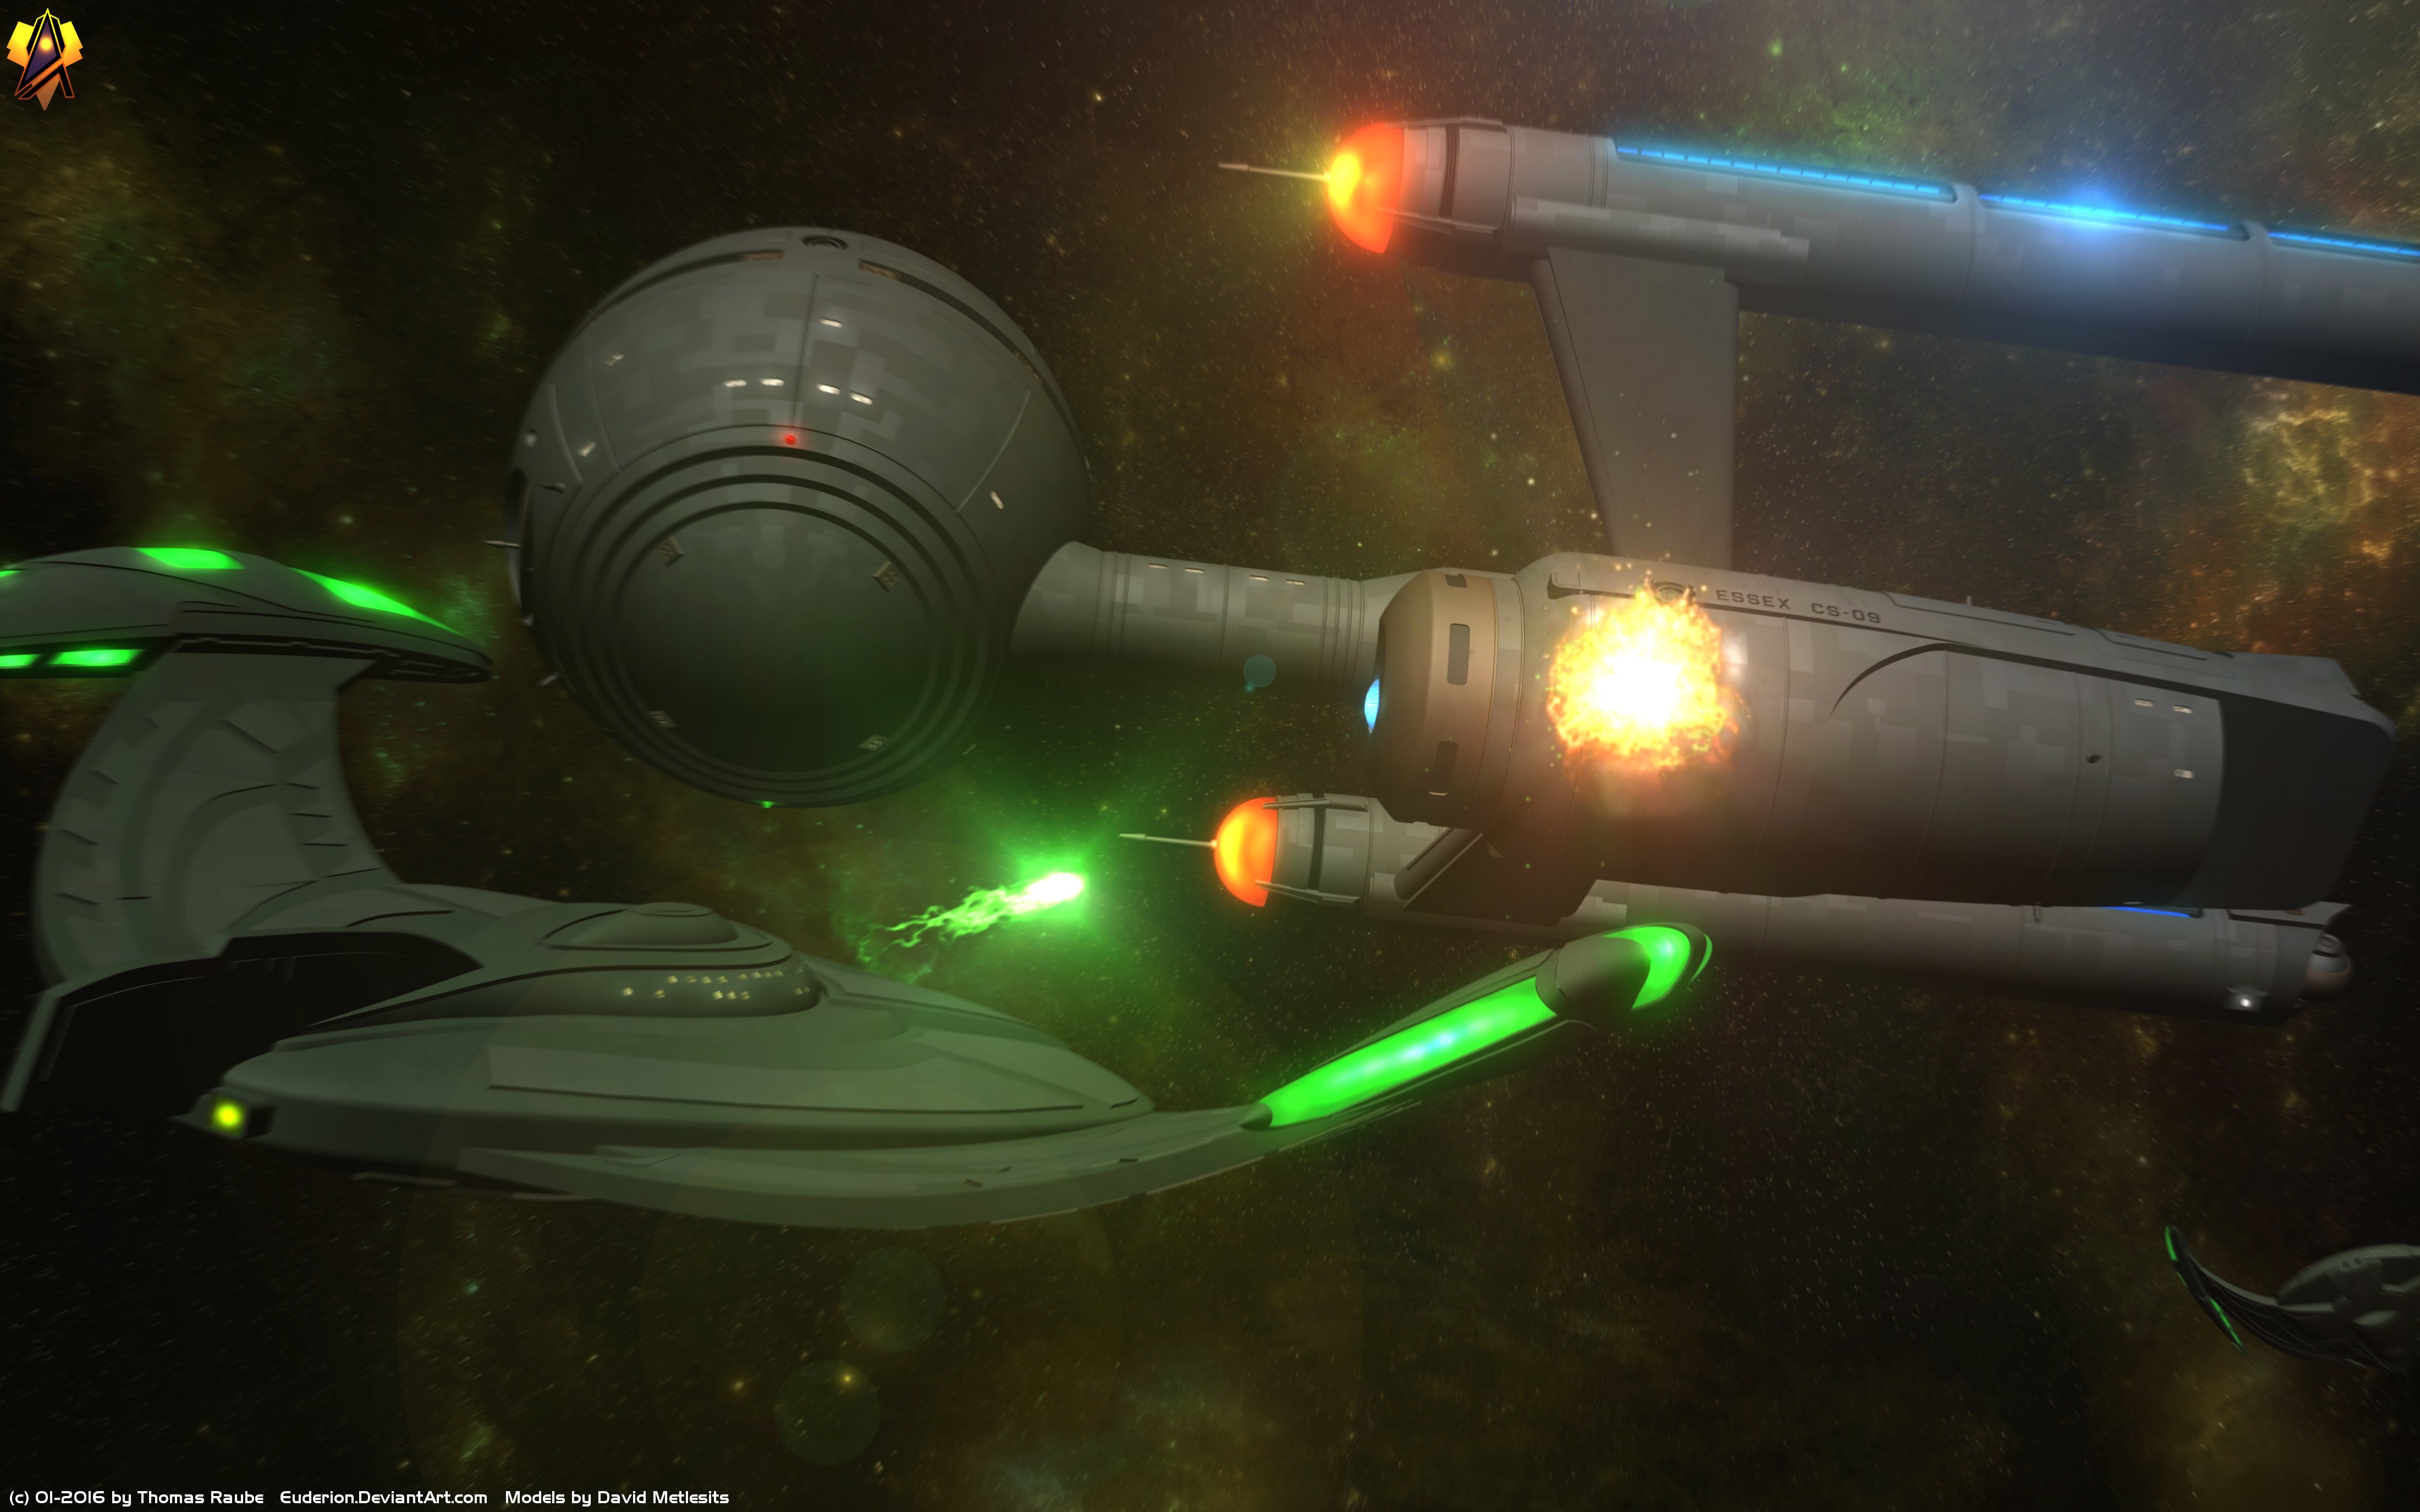 Battle Romulan Star Trek Romulan War Sci Fi Spaceship Star Trek 4400x2750